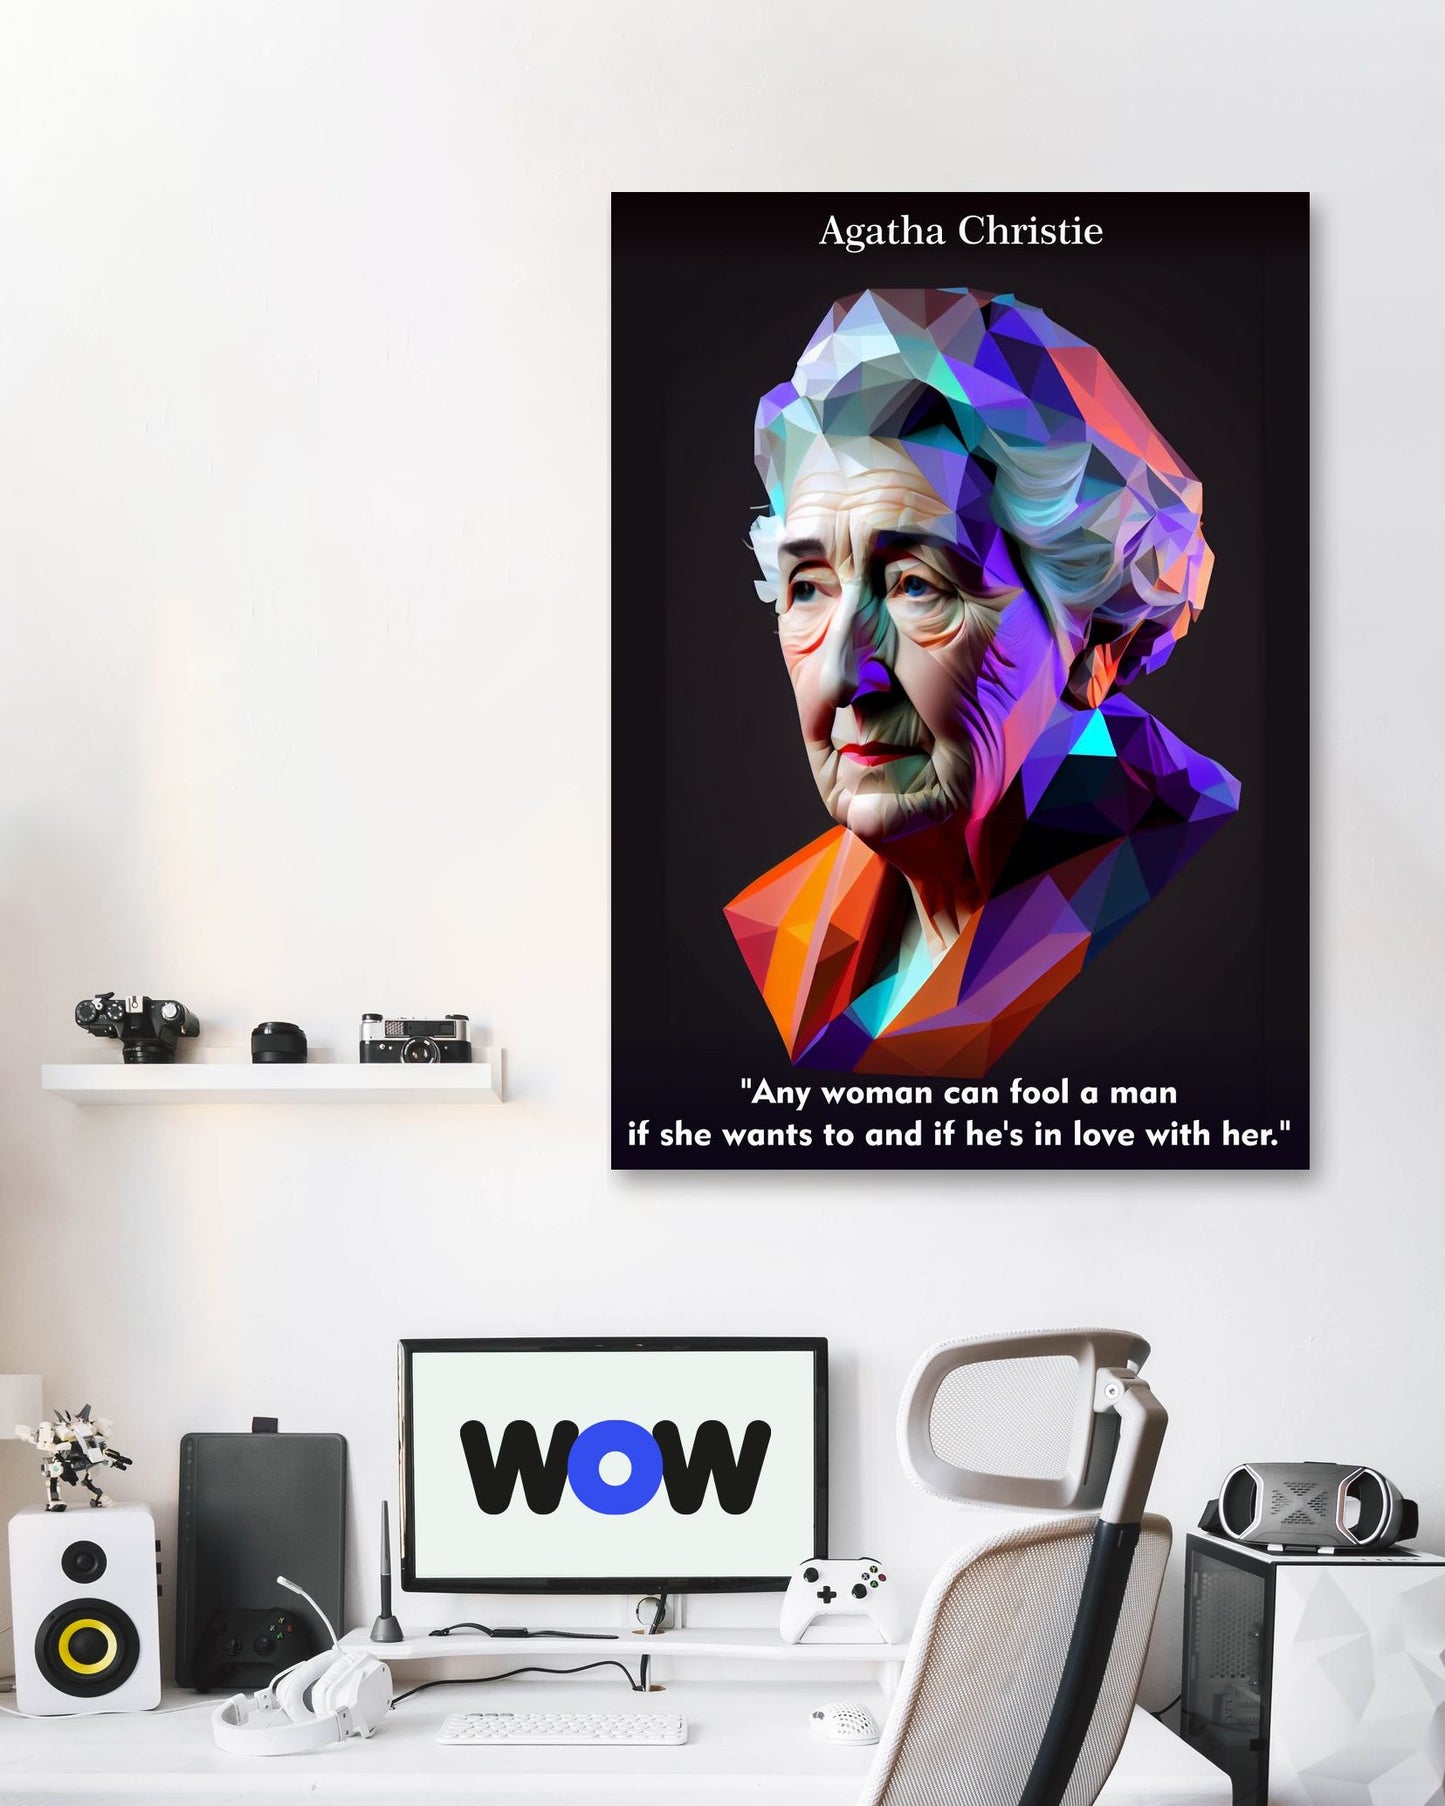 Agatha Christie Quotes - @WpapArtist